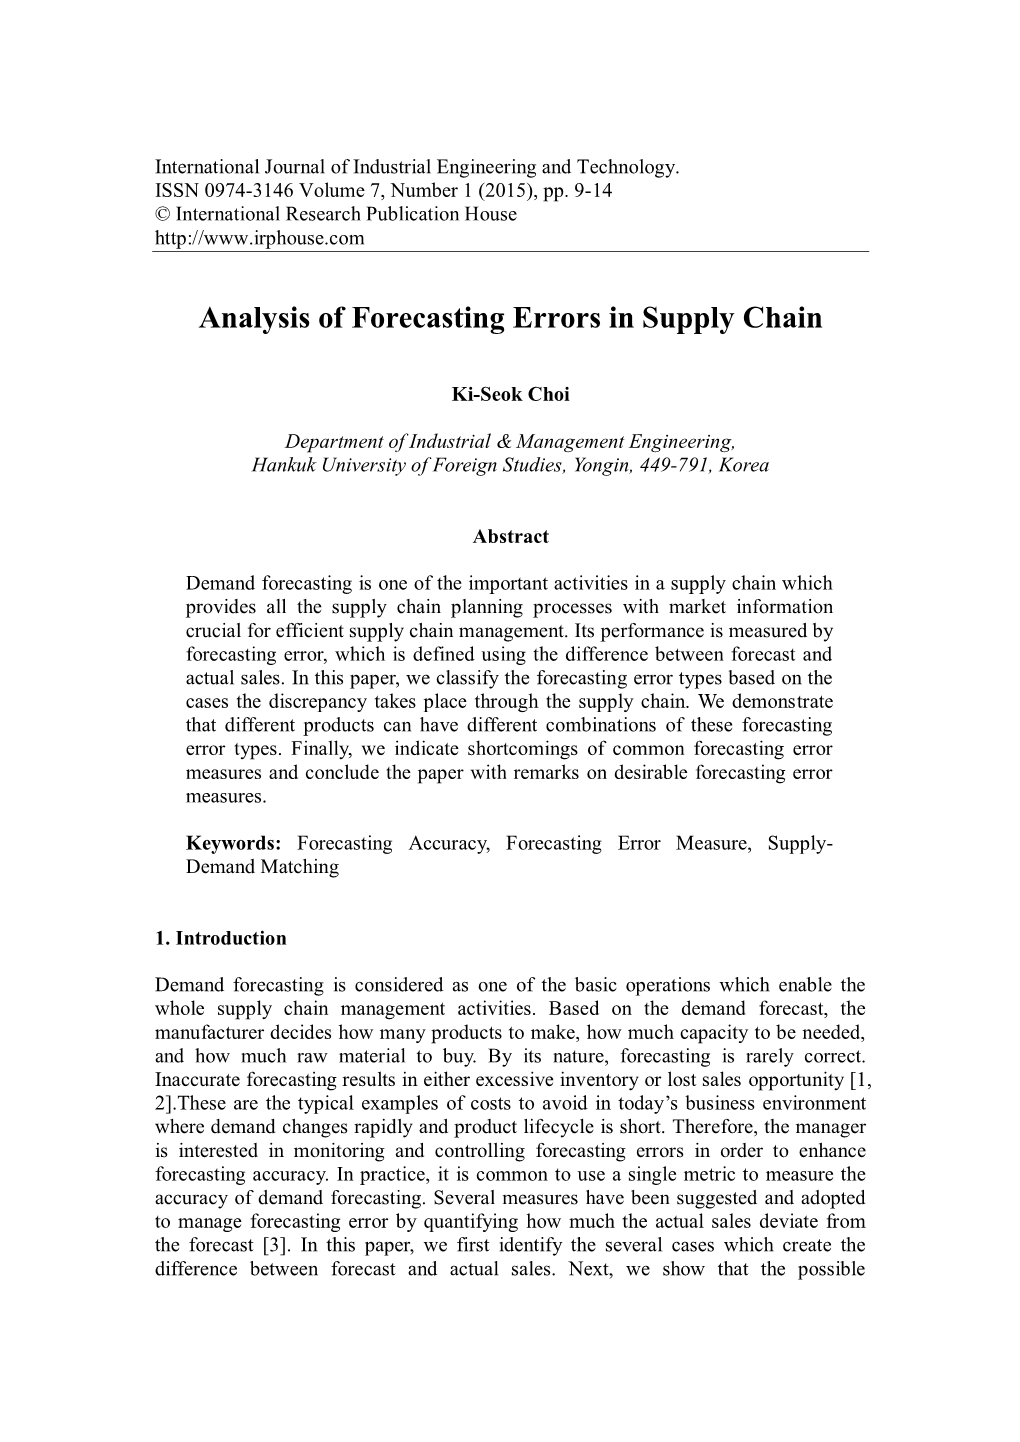 Analysis of Forecasting Errors in Supply Chain